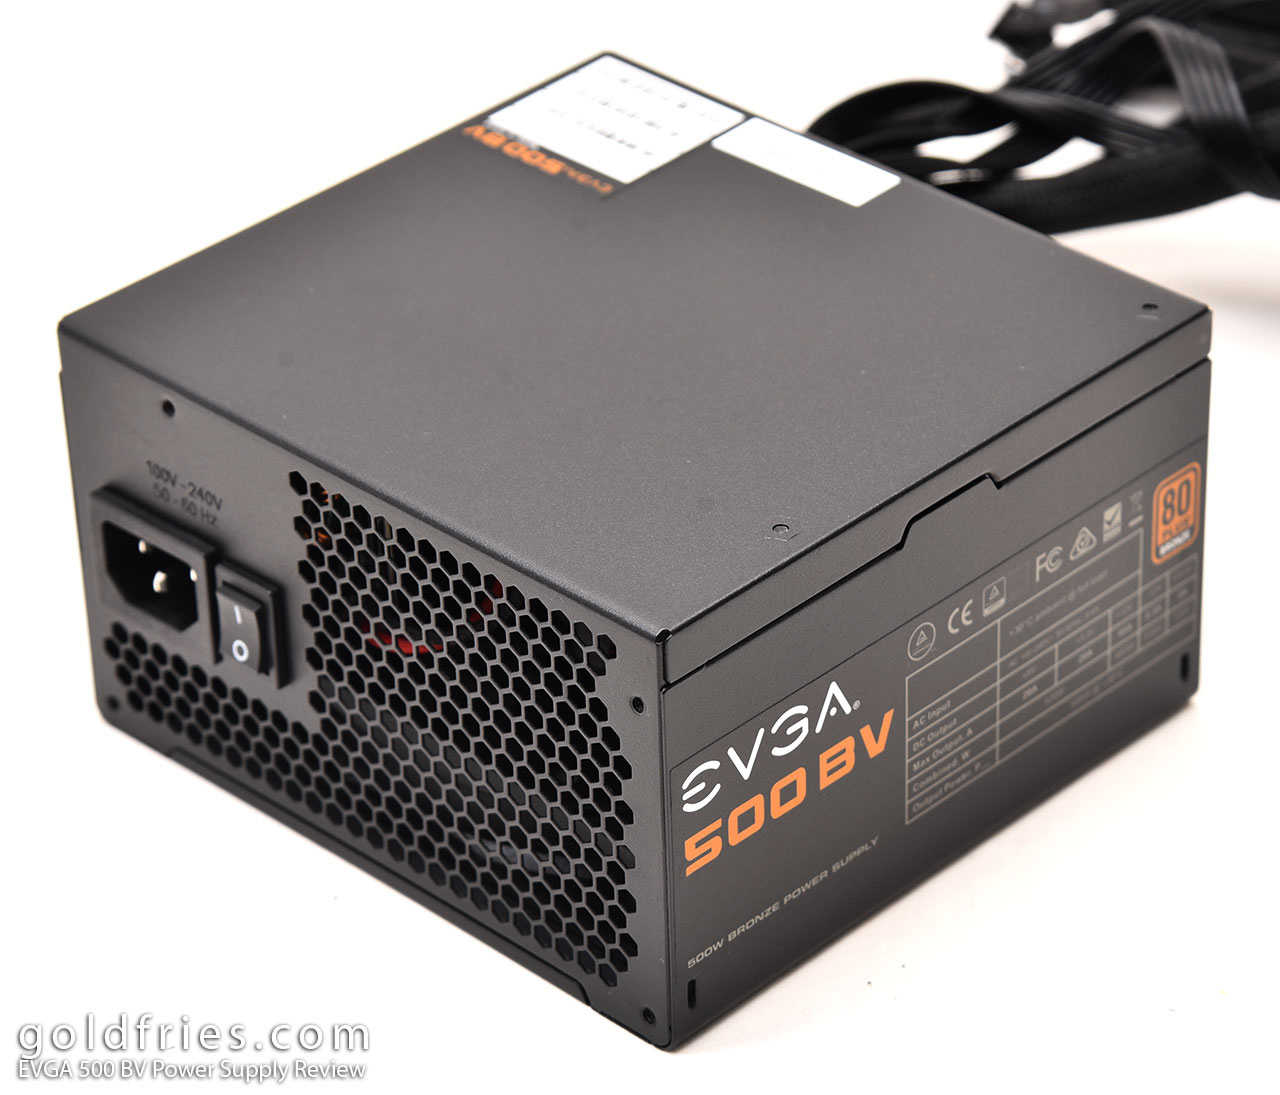 EVGA 500 BV Power Supply Review